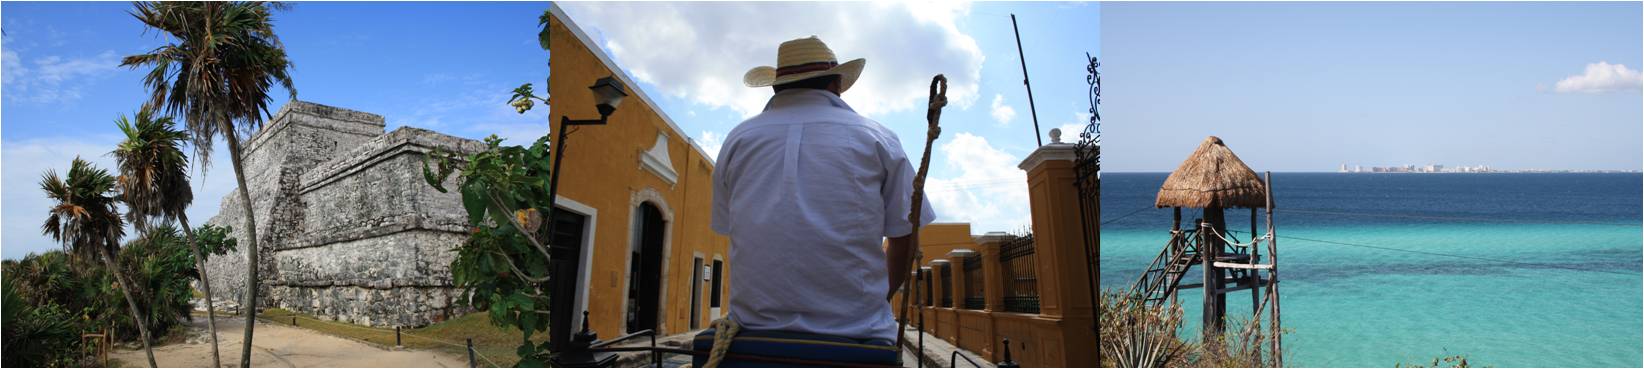 Traveling Yucatán Mexico